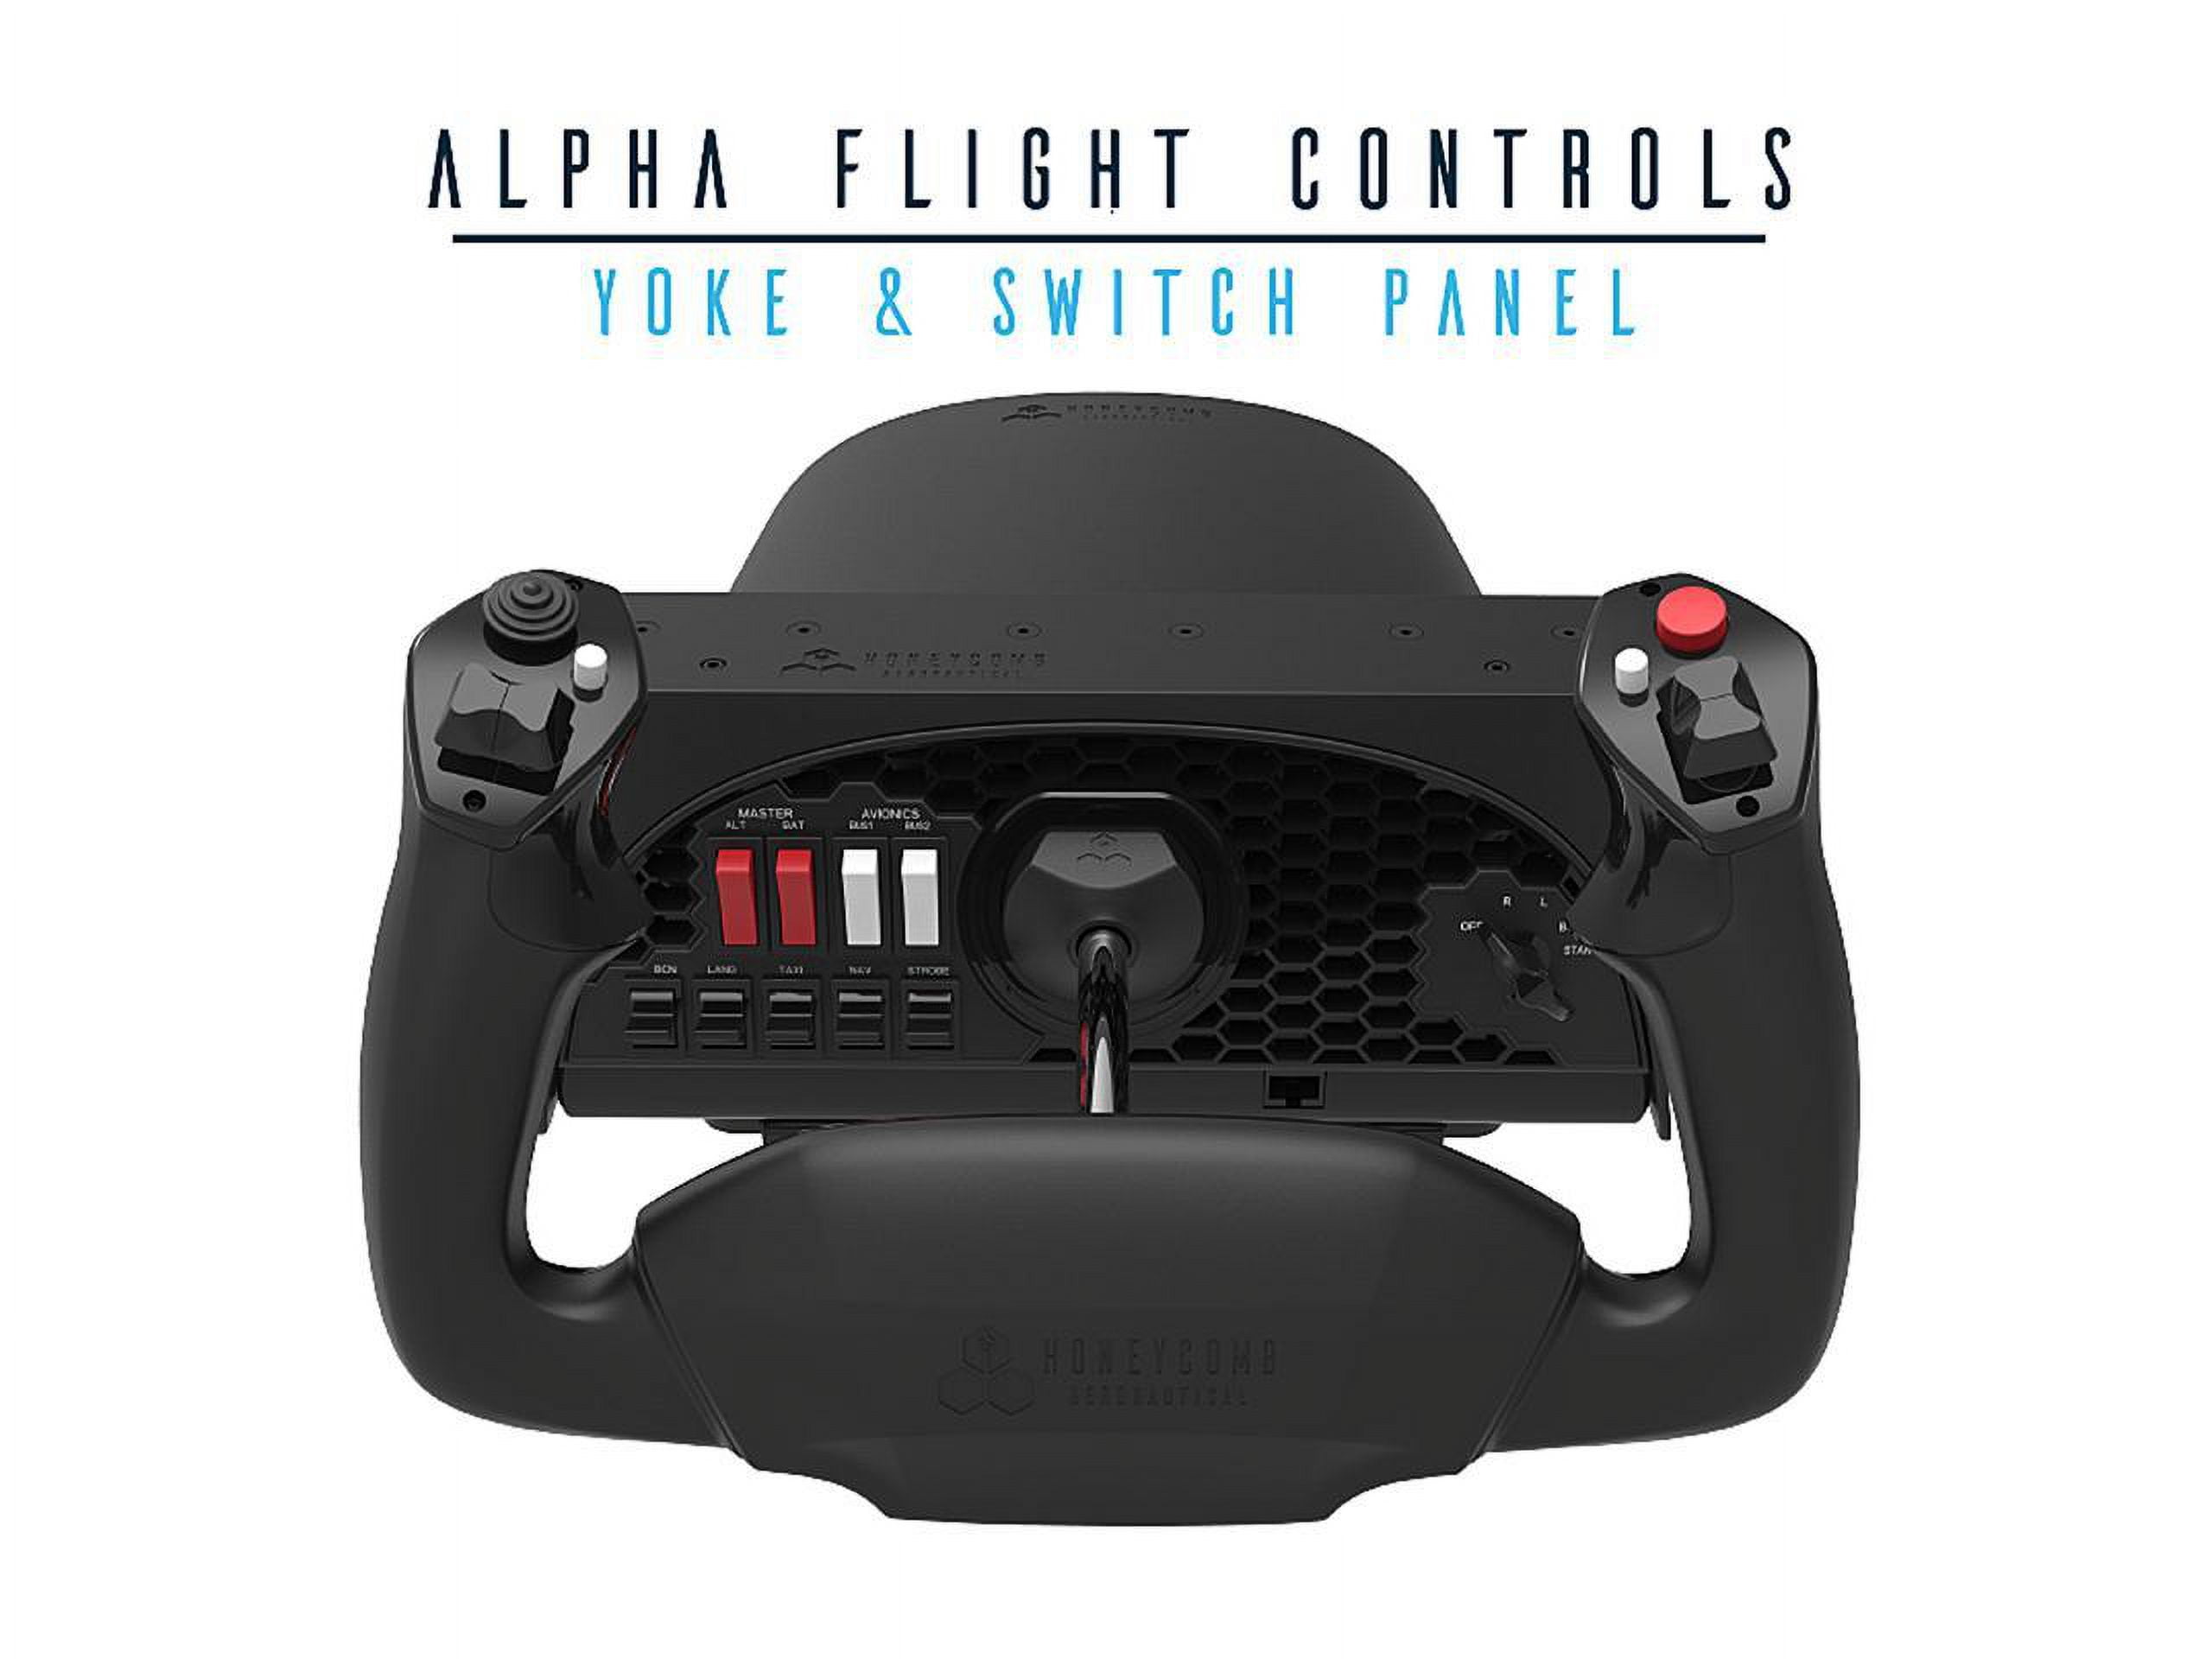 Honeycomb Aeronautical Alpha Flight Controls Yoke & Switch Panel in  aviation quality for flight simulators   Universal control system for  simmers,